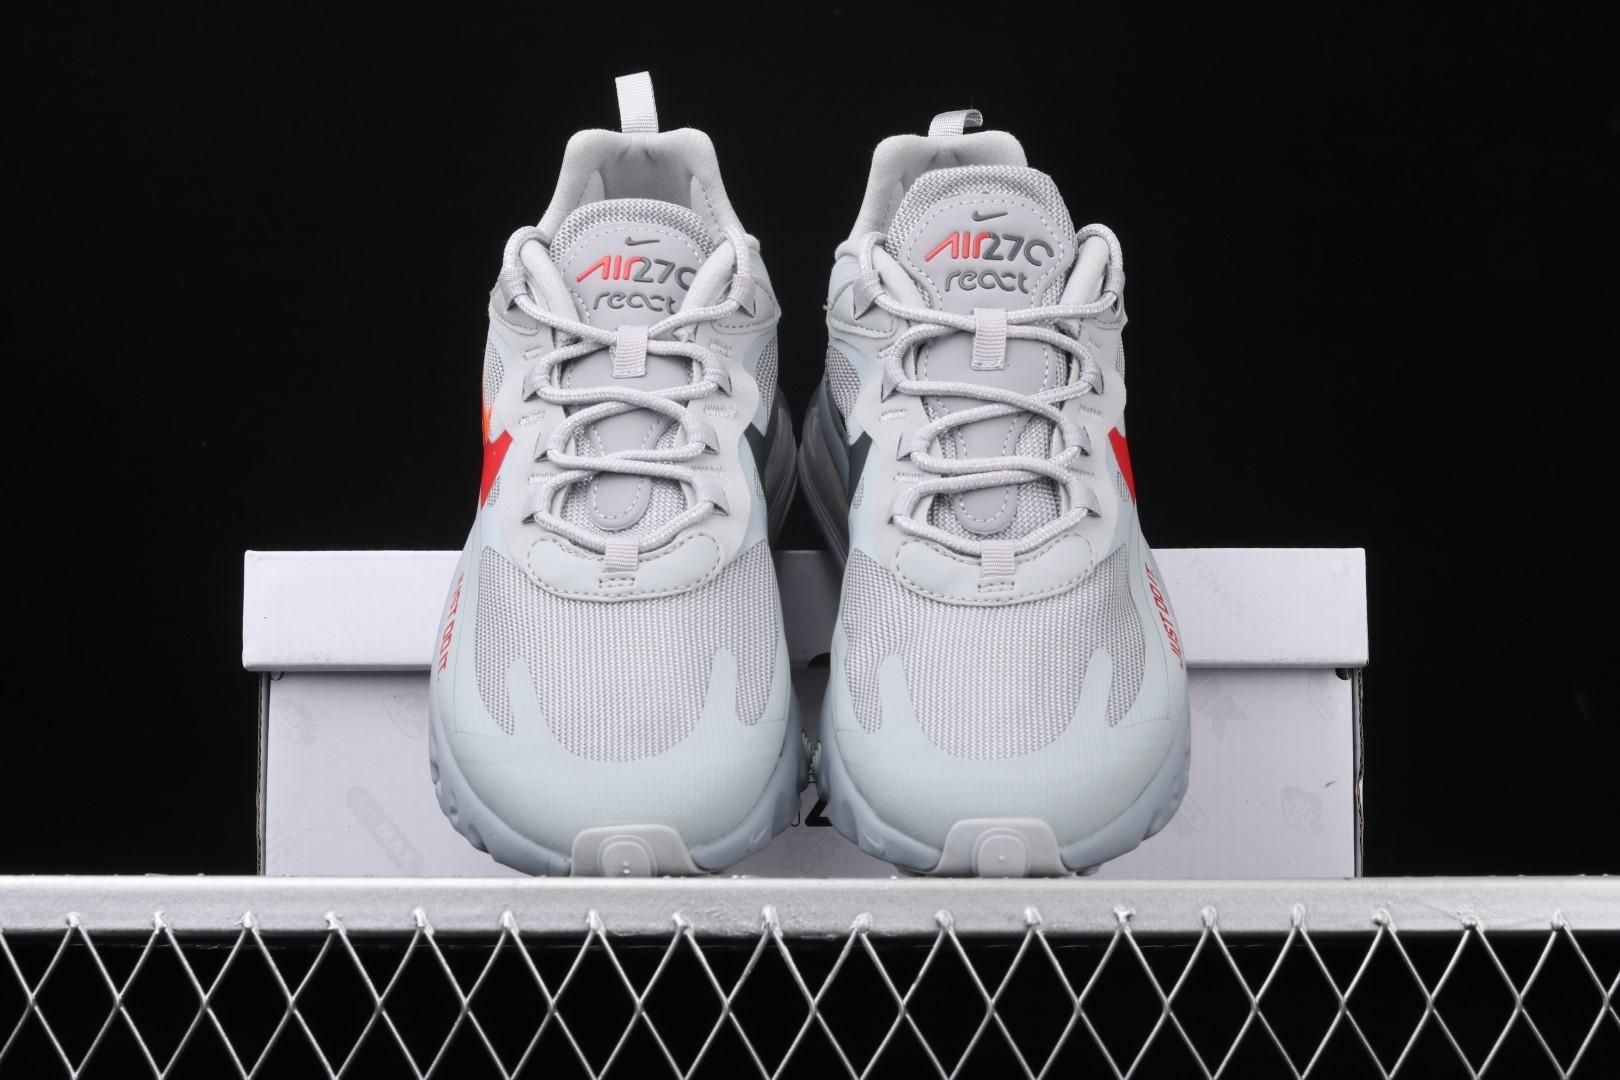 NikeMens Air Max 270 AM270 React - Just Do It Grey